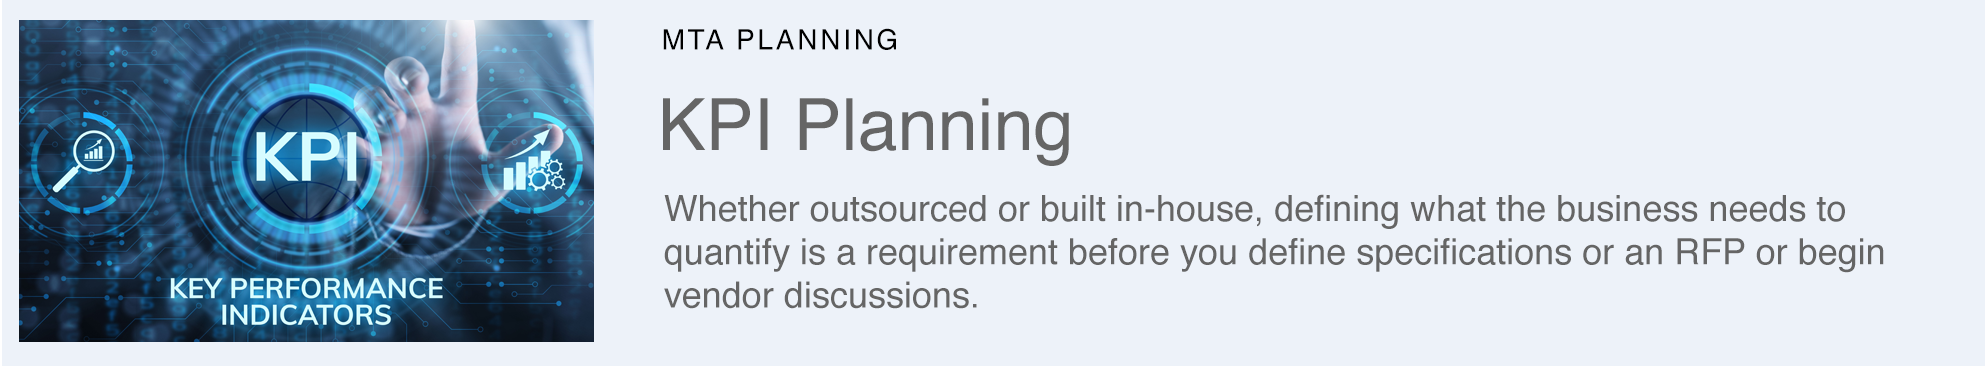 KPI Planning